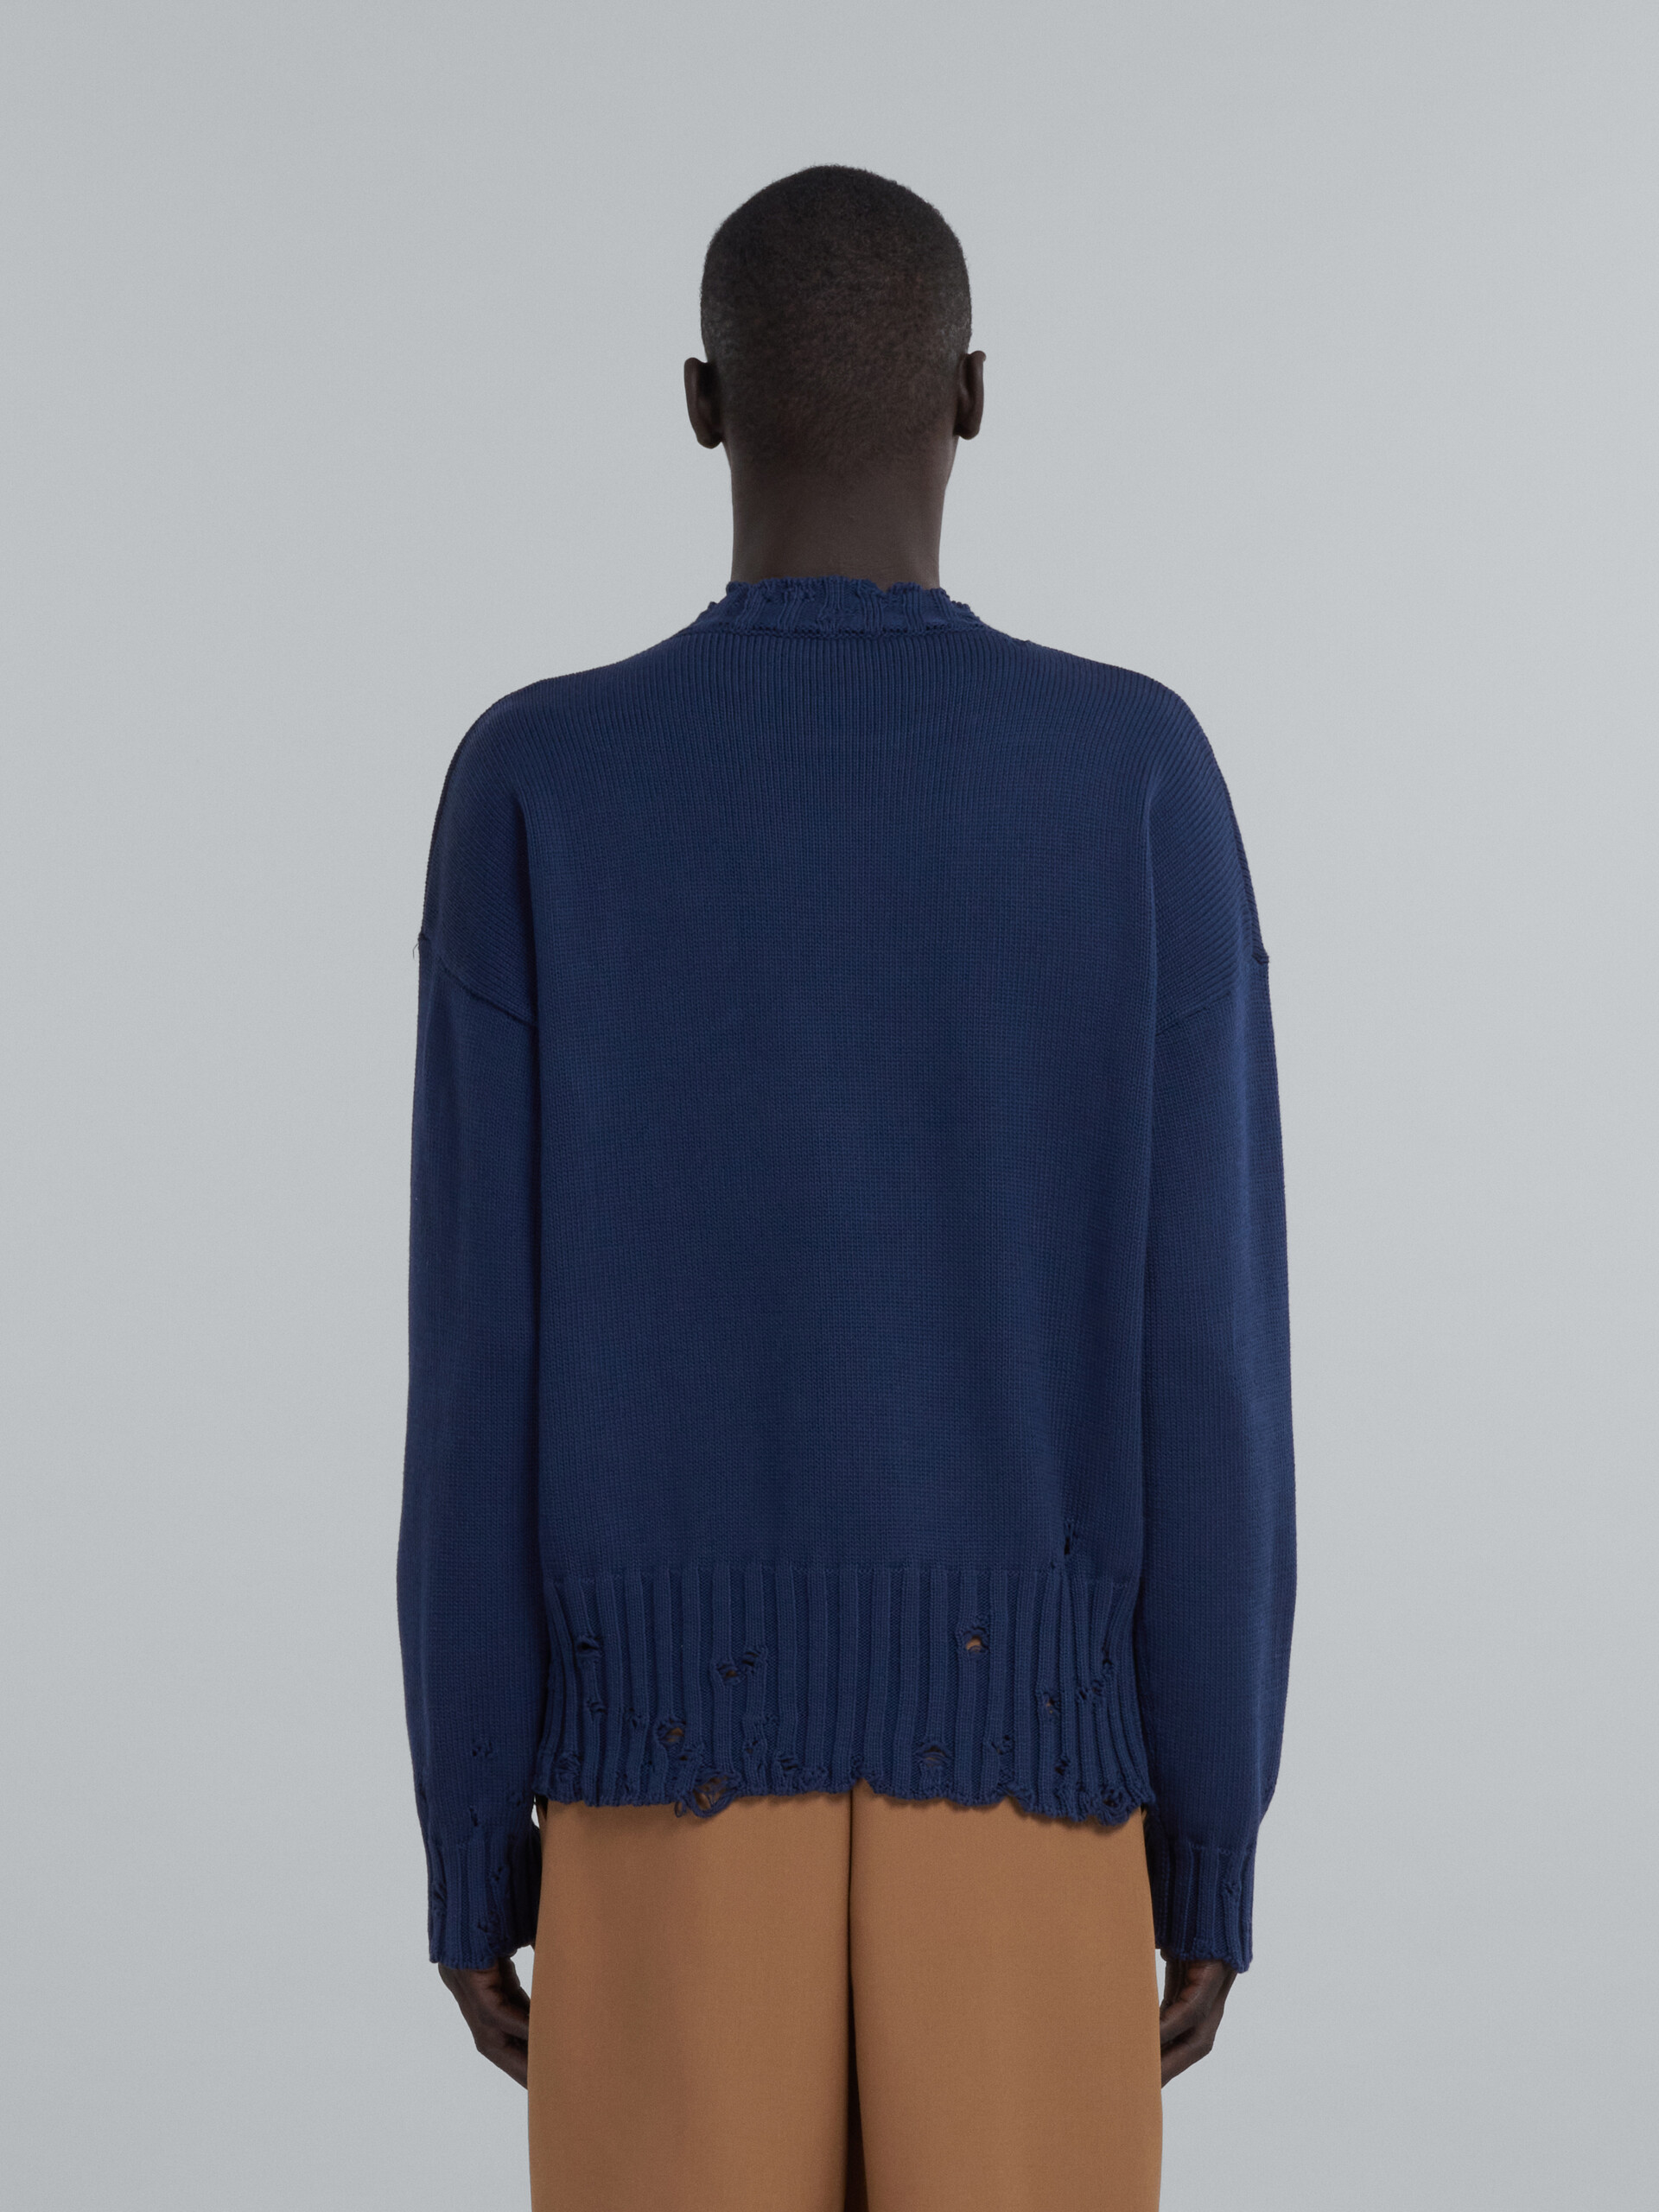 Blue cotton crewneck sweater - Pullovers - Image 3